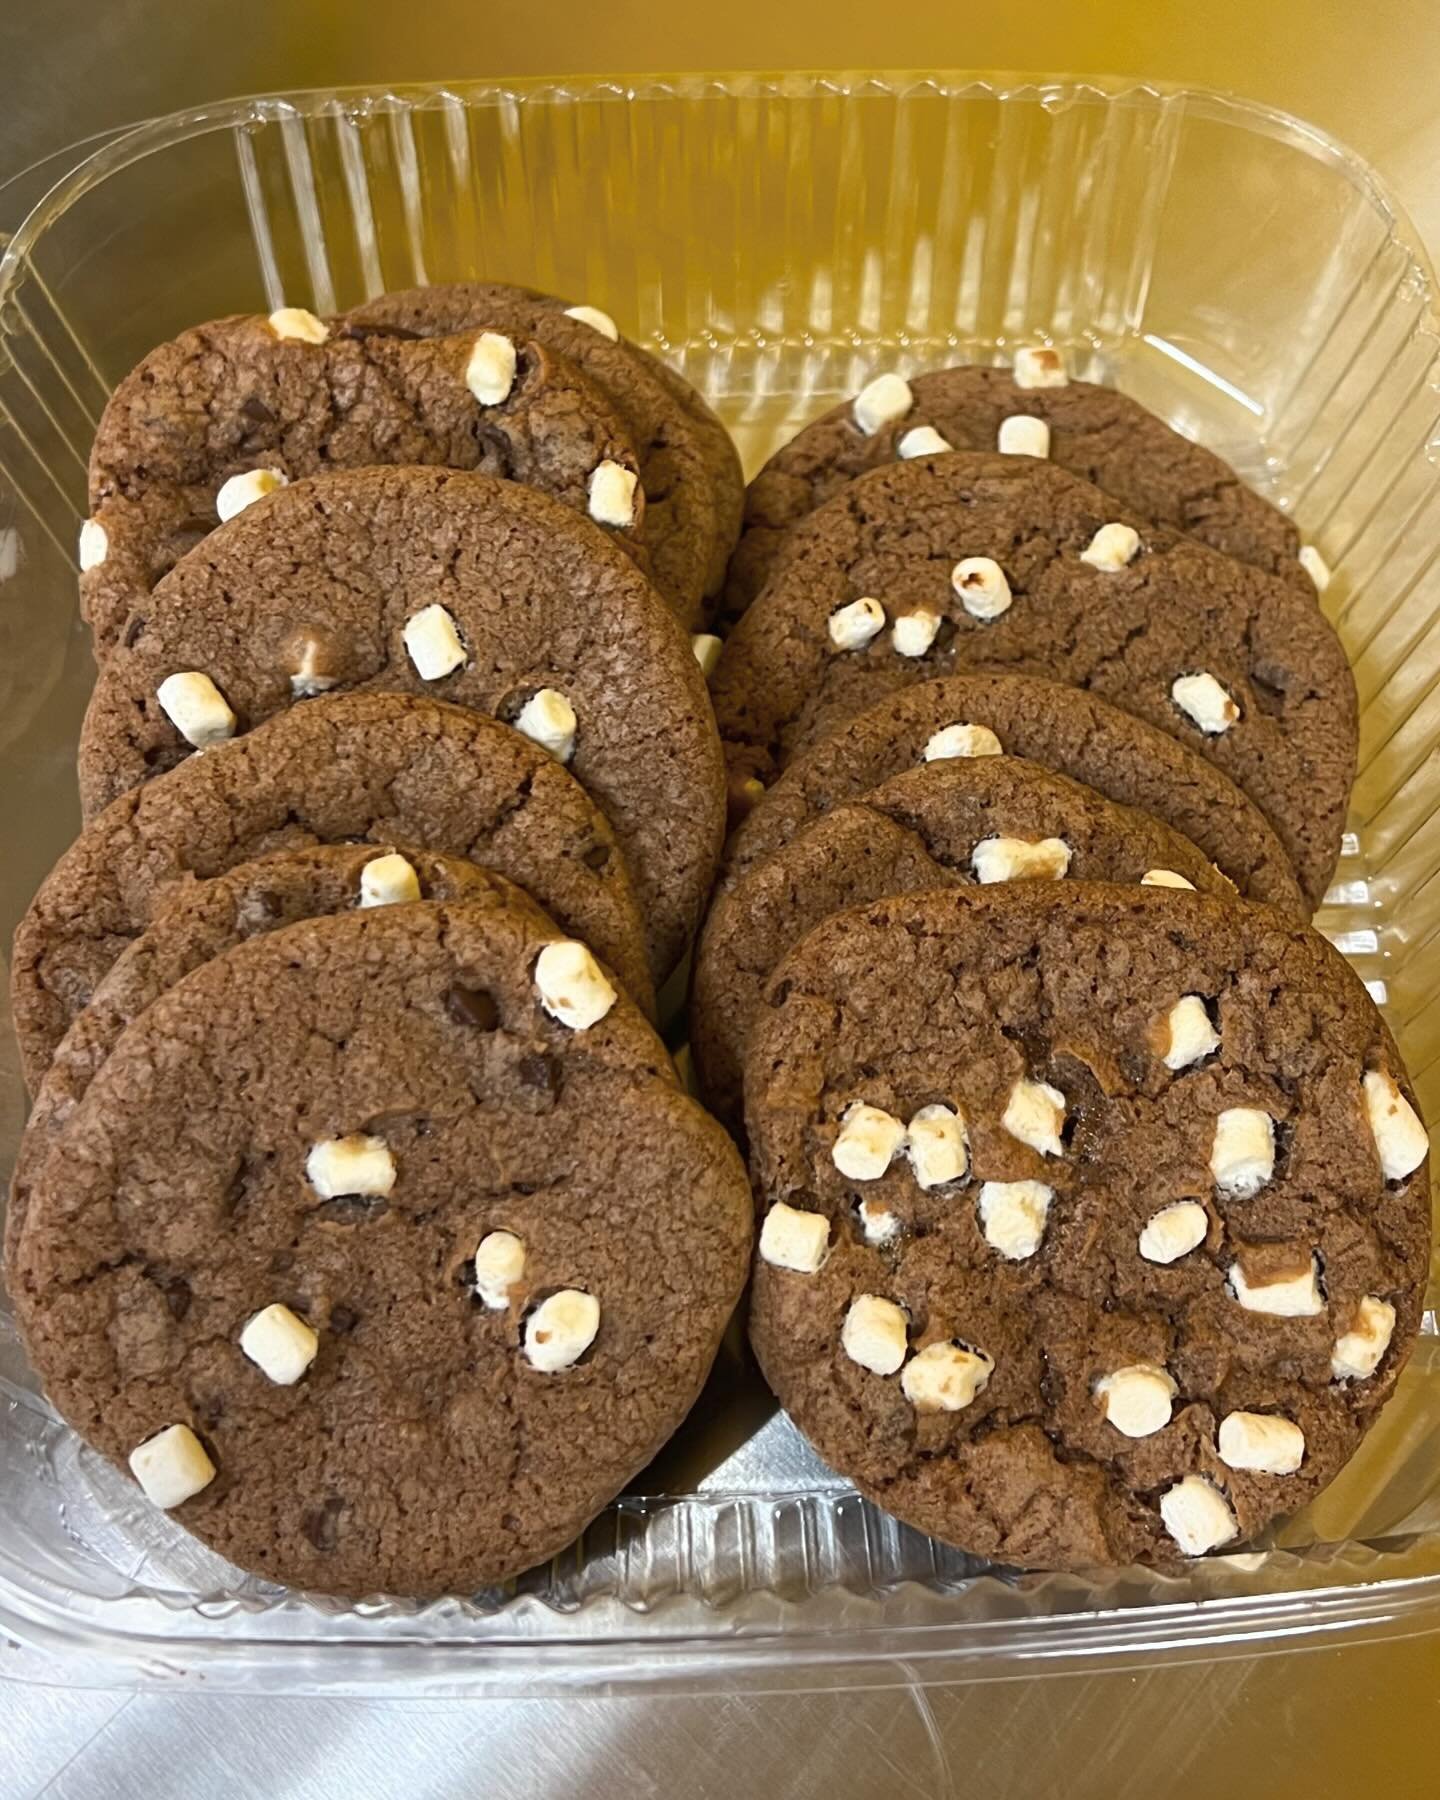 These Hot Cocoa Cookies need their own moment! 🤎 🤍🖤 Plus the adorable kids that made them!

#sillyspoons #warringtonpa #buckscountypa #buckslifestyle #buckscountymoms #newtownpa #buckshappening #mommiesofbuckscounty #buckscountymoment #buckscounty